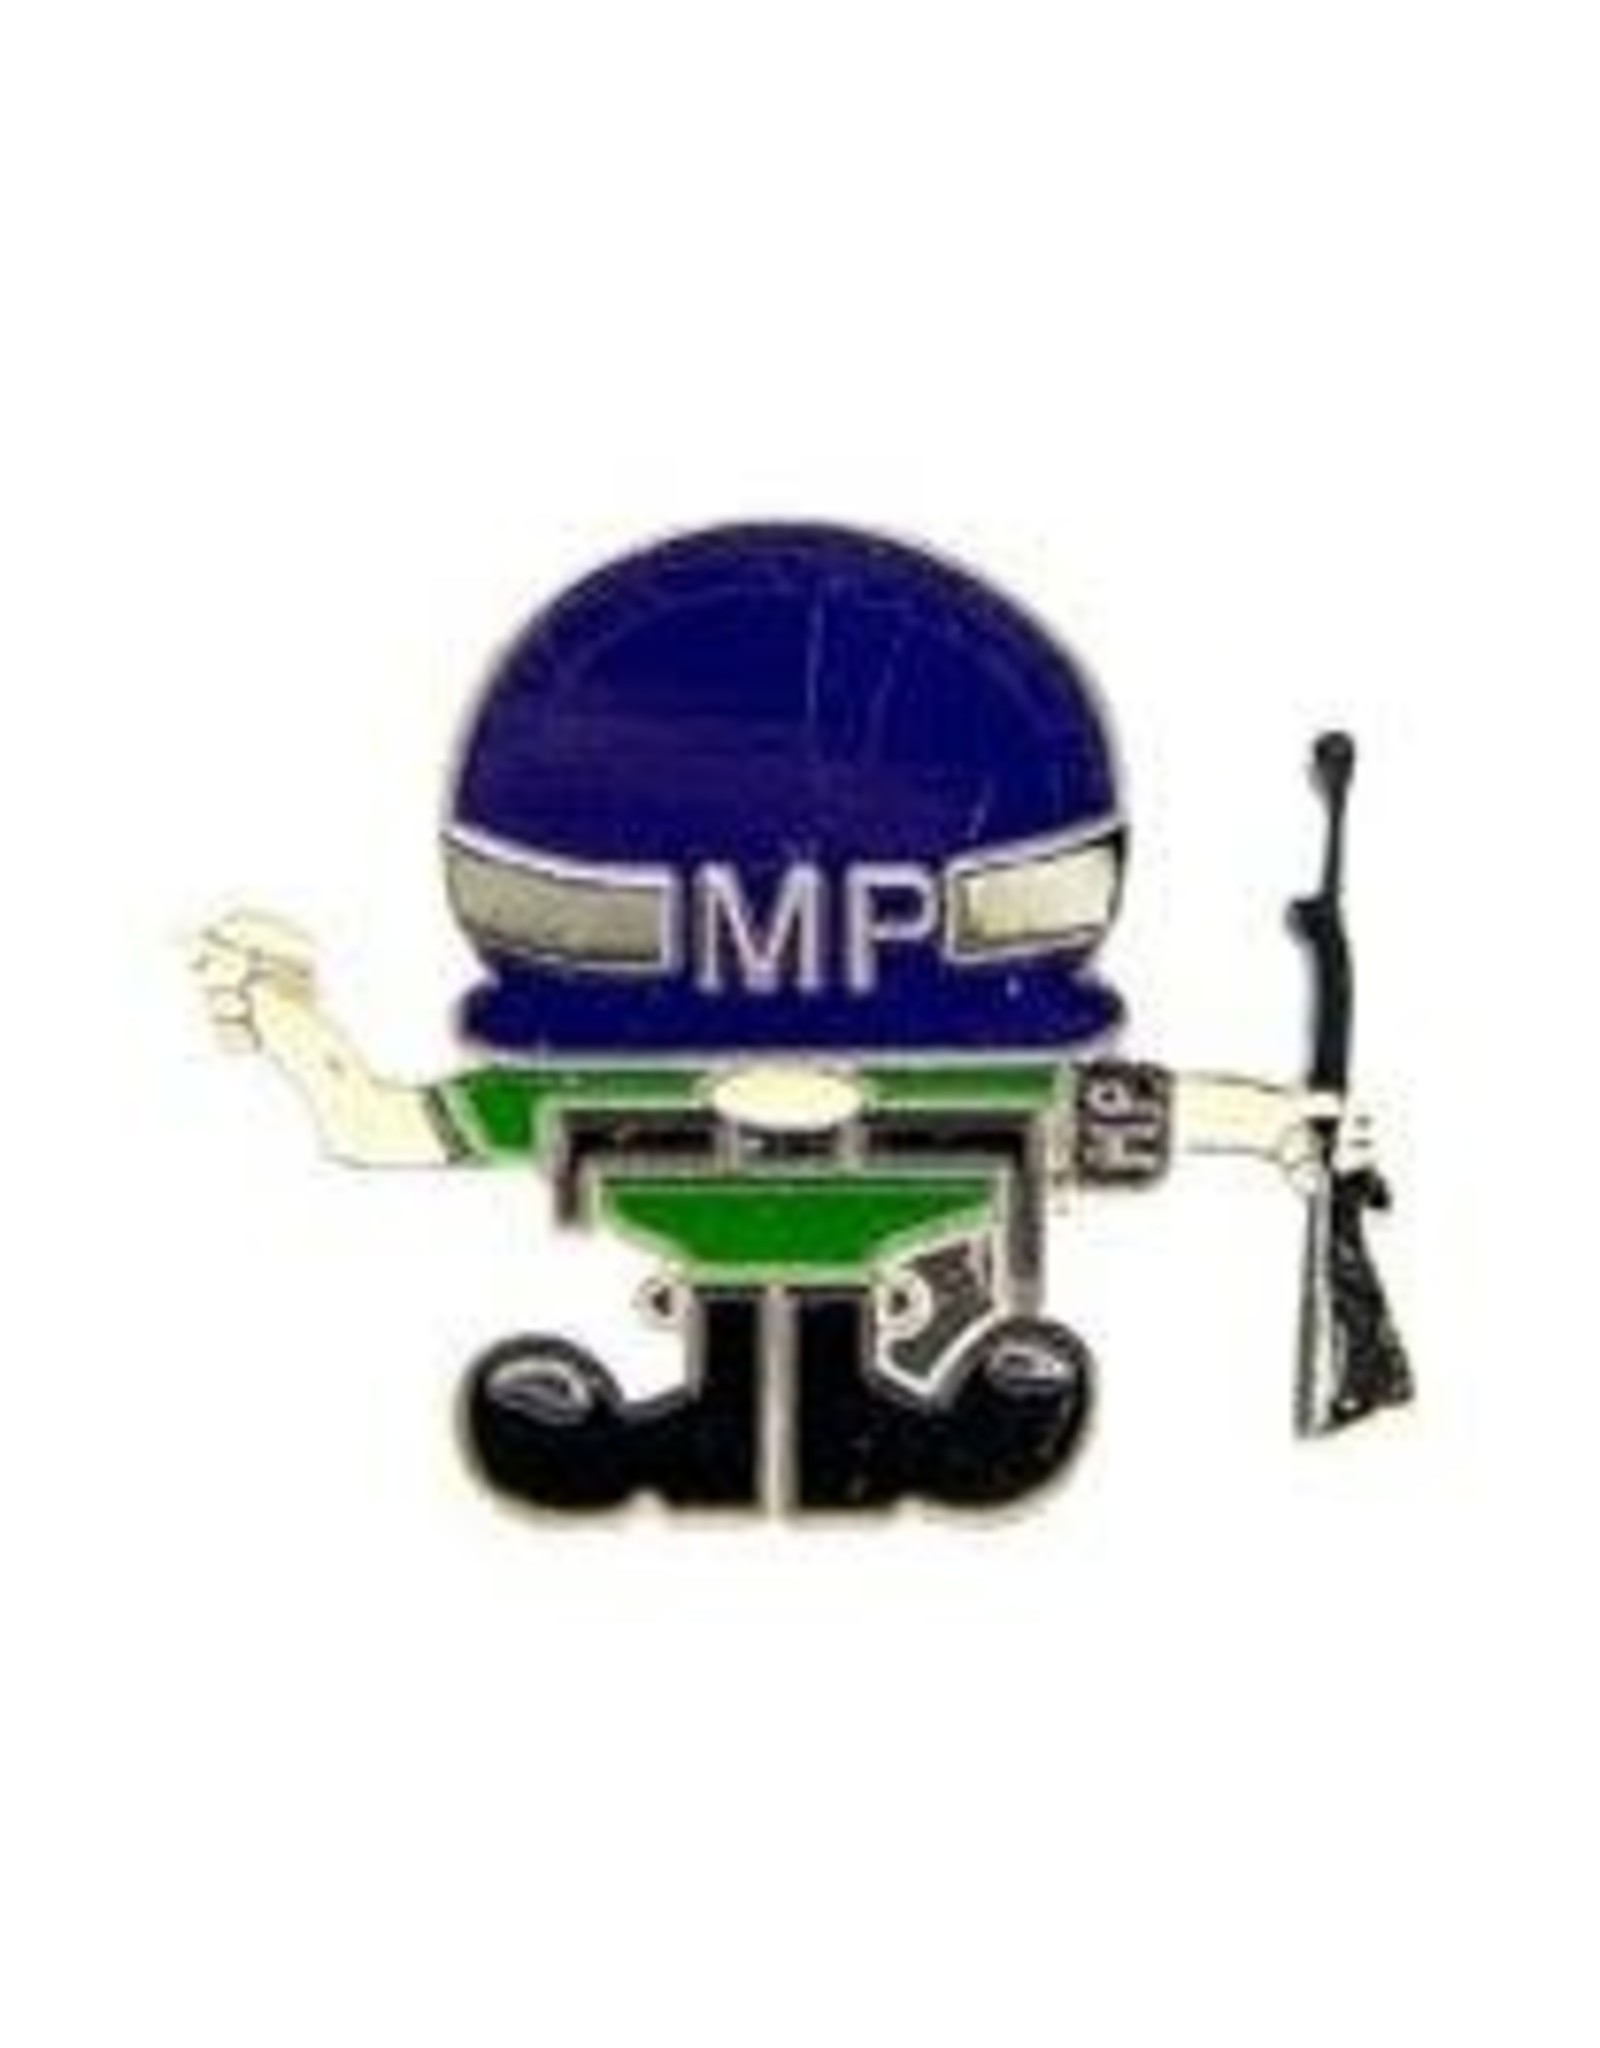 Pin - Soldier MP Man